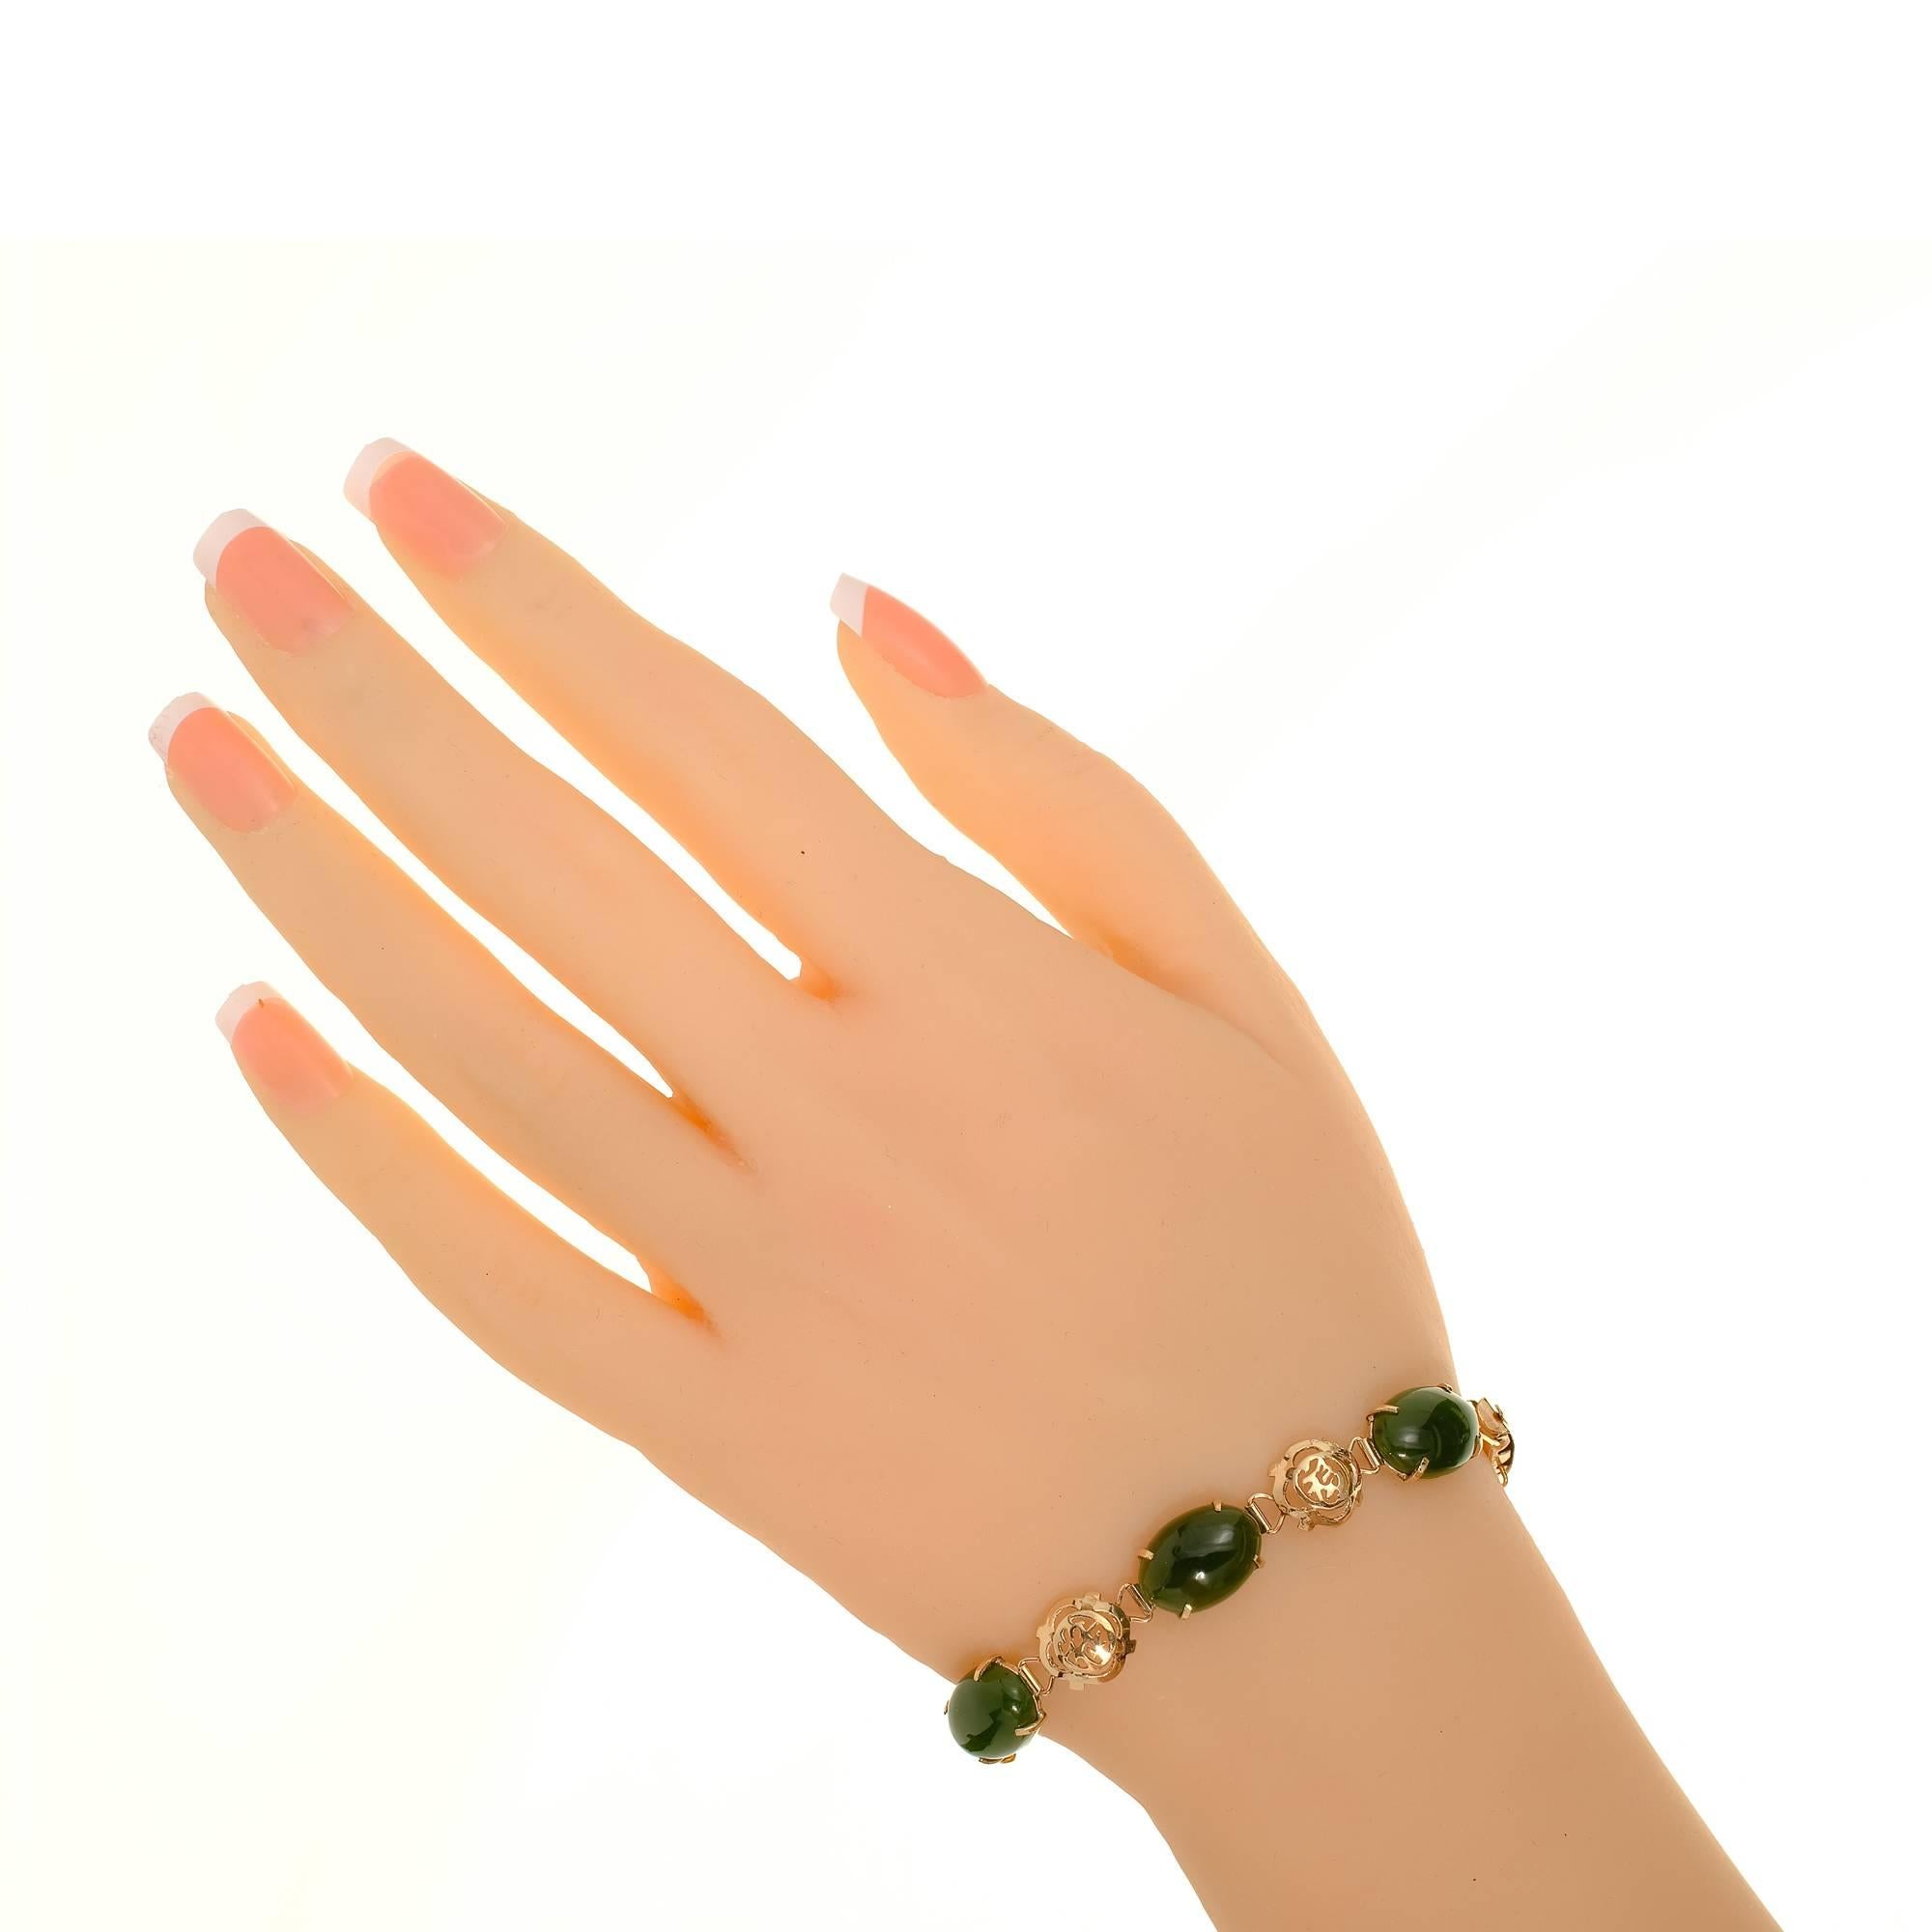 Vintage 1940-1950 18k rose gold bracelet with 6 natural well polished Nephrite Jadeite Jade cabochons.

5 oval cabochon Nephrite Jadeite Jade, 14.06 x 9.89 x 4.29mm
18k rose gold
Tested: 18k
Stamped: K18
9.4 grams
Length: 7 inches – Width: 9.87mm –